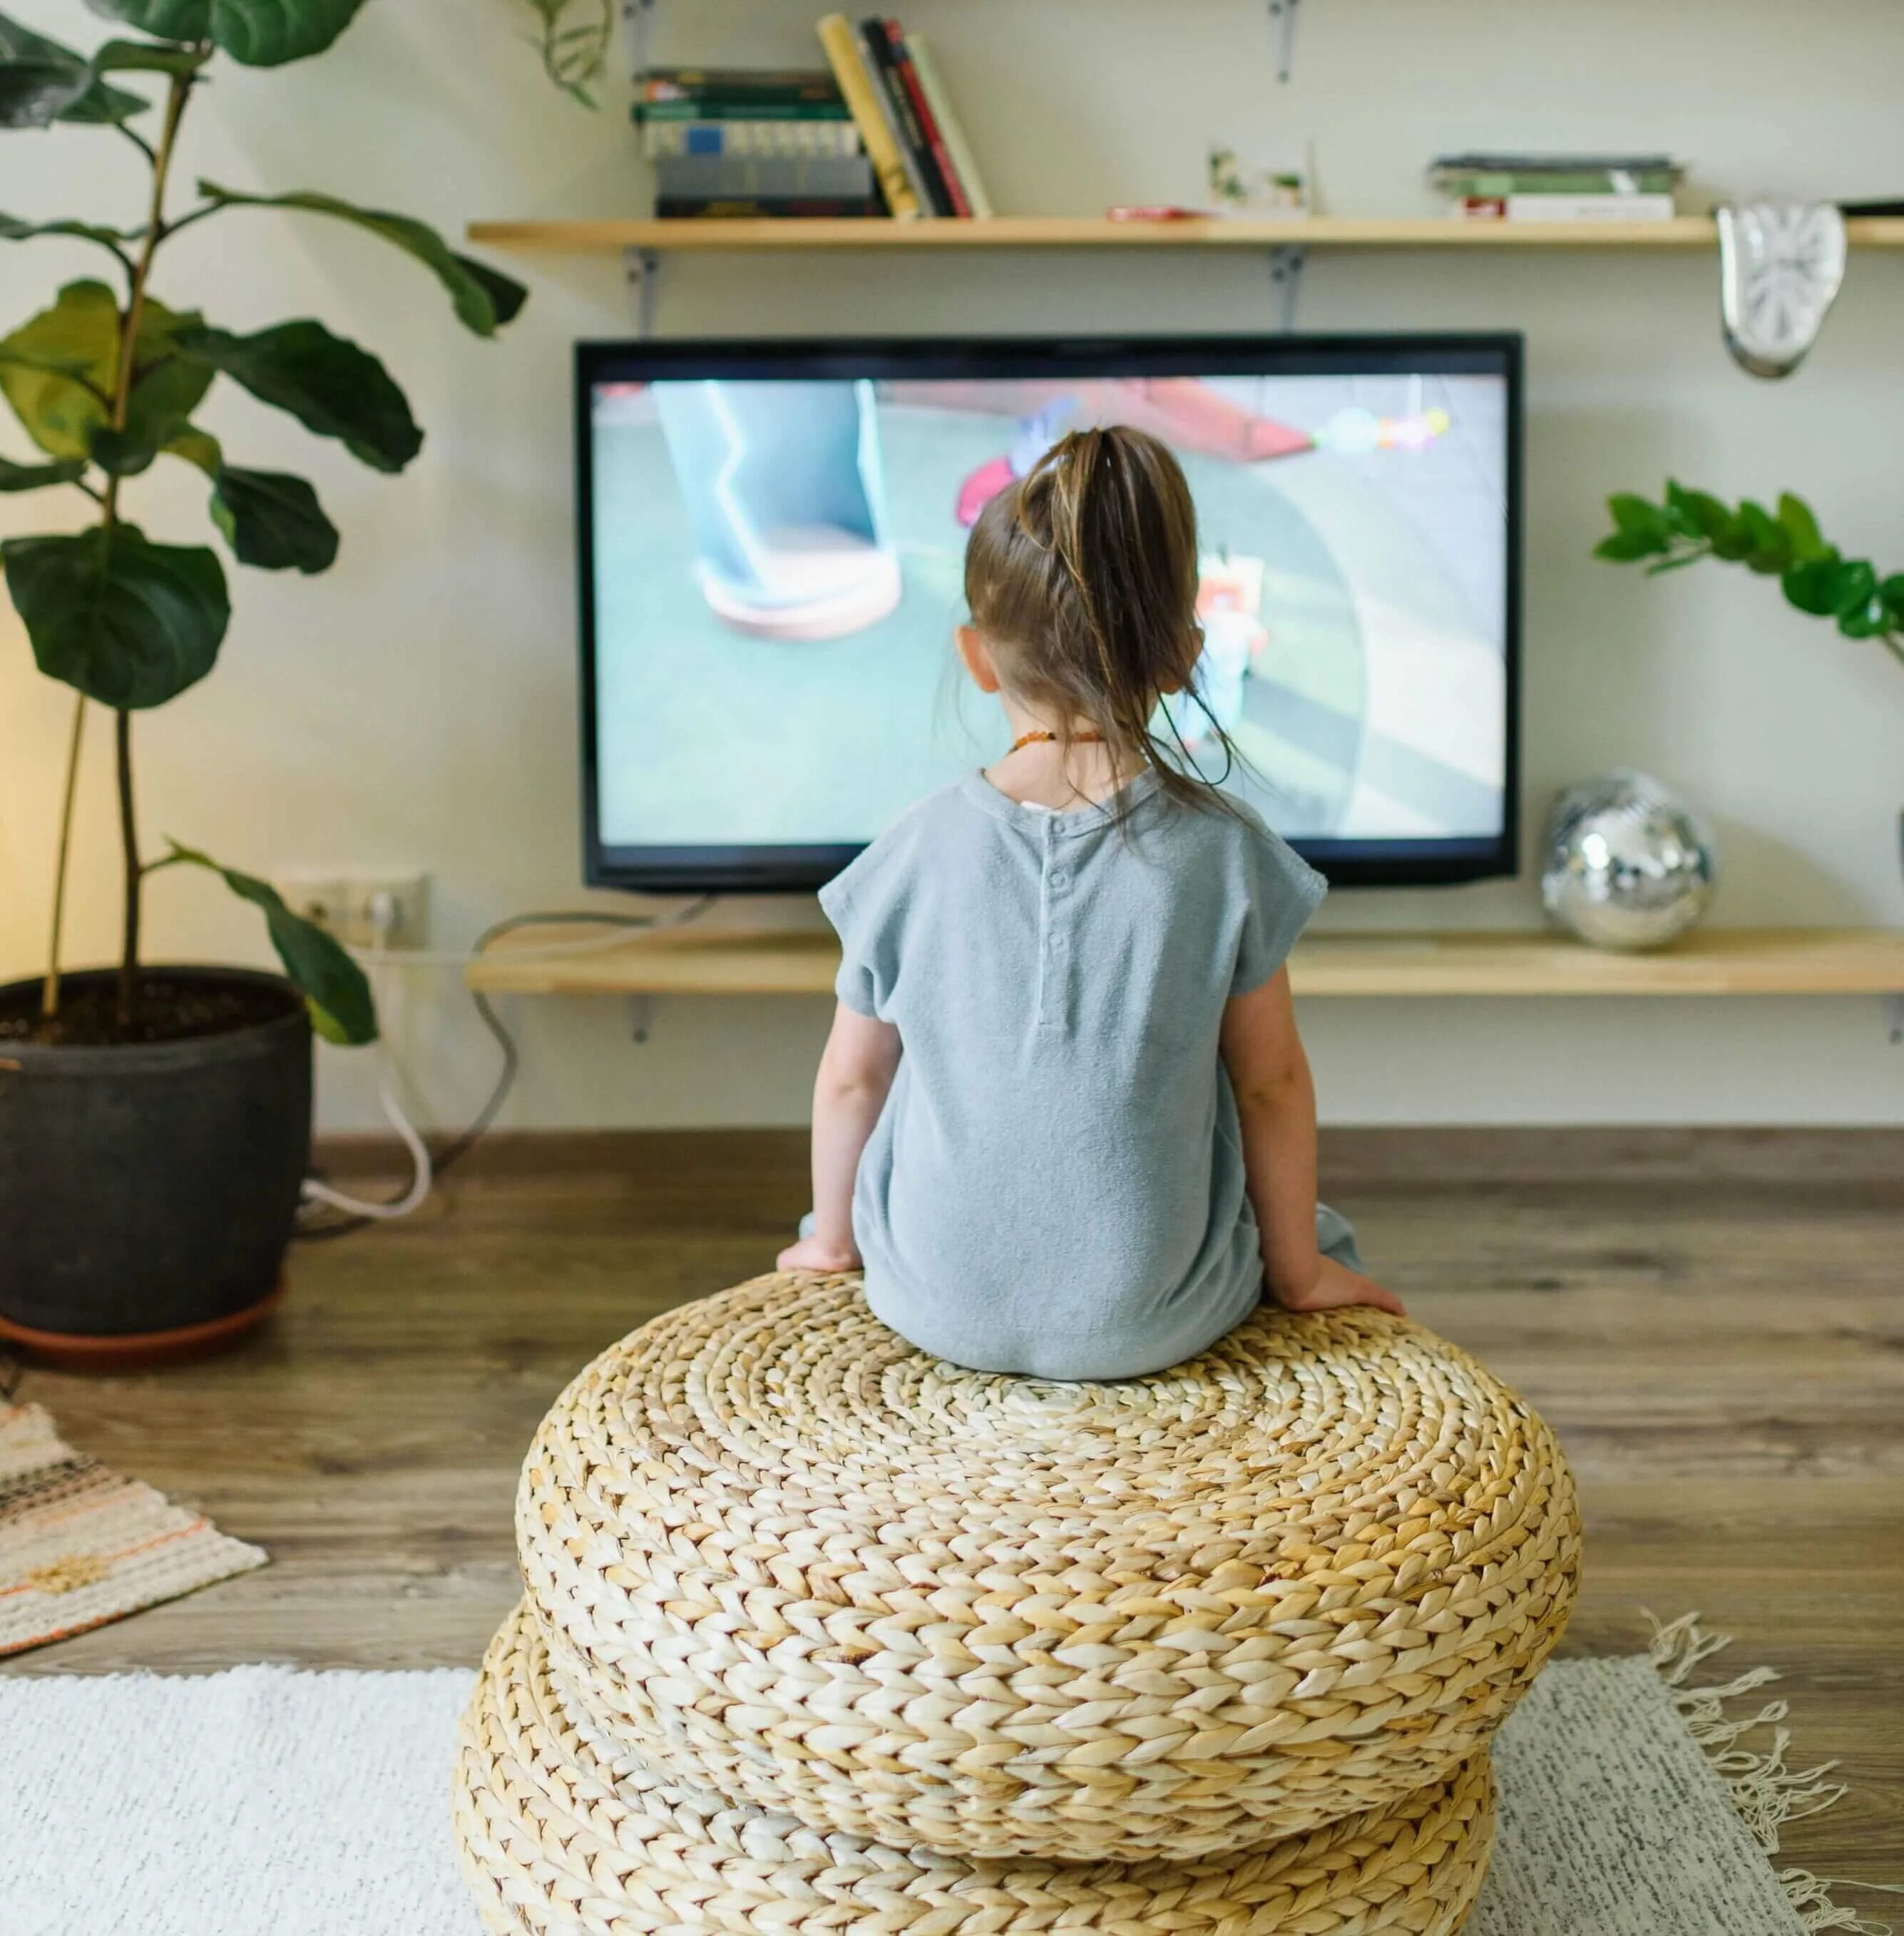 Дети перед телевизором. Телевизор для детей. Дети смотрят телевизор. Девочка смотрит телевизор. Ребенок перед Телеком.